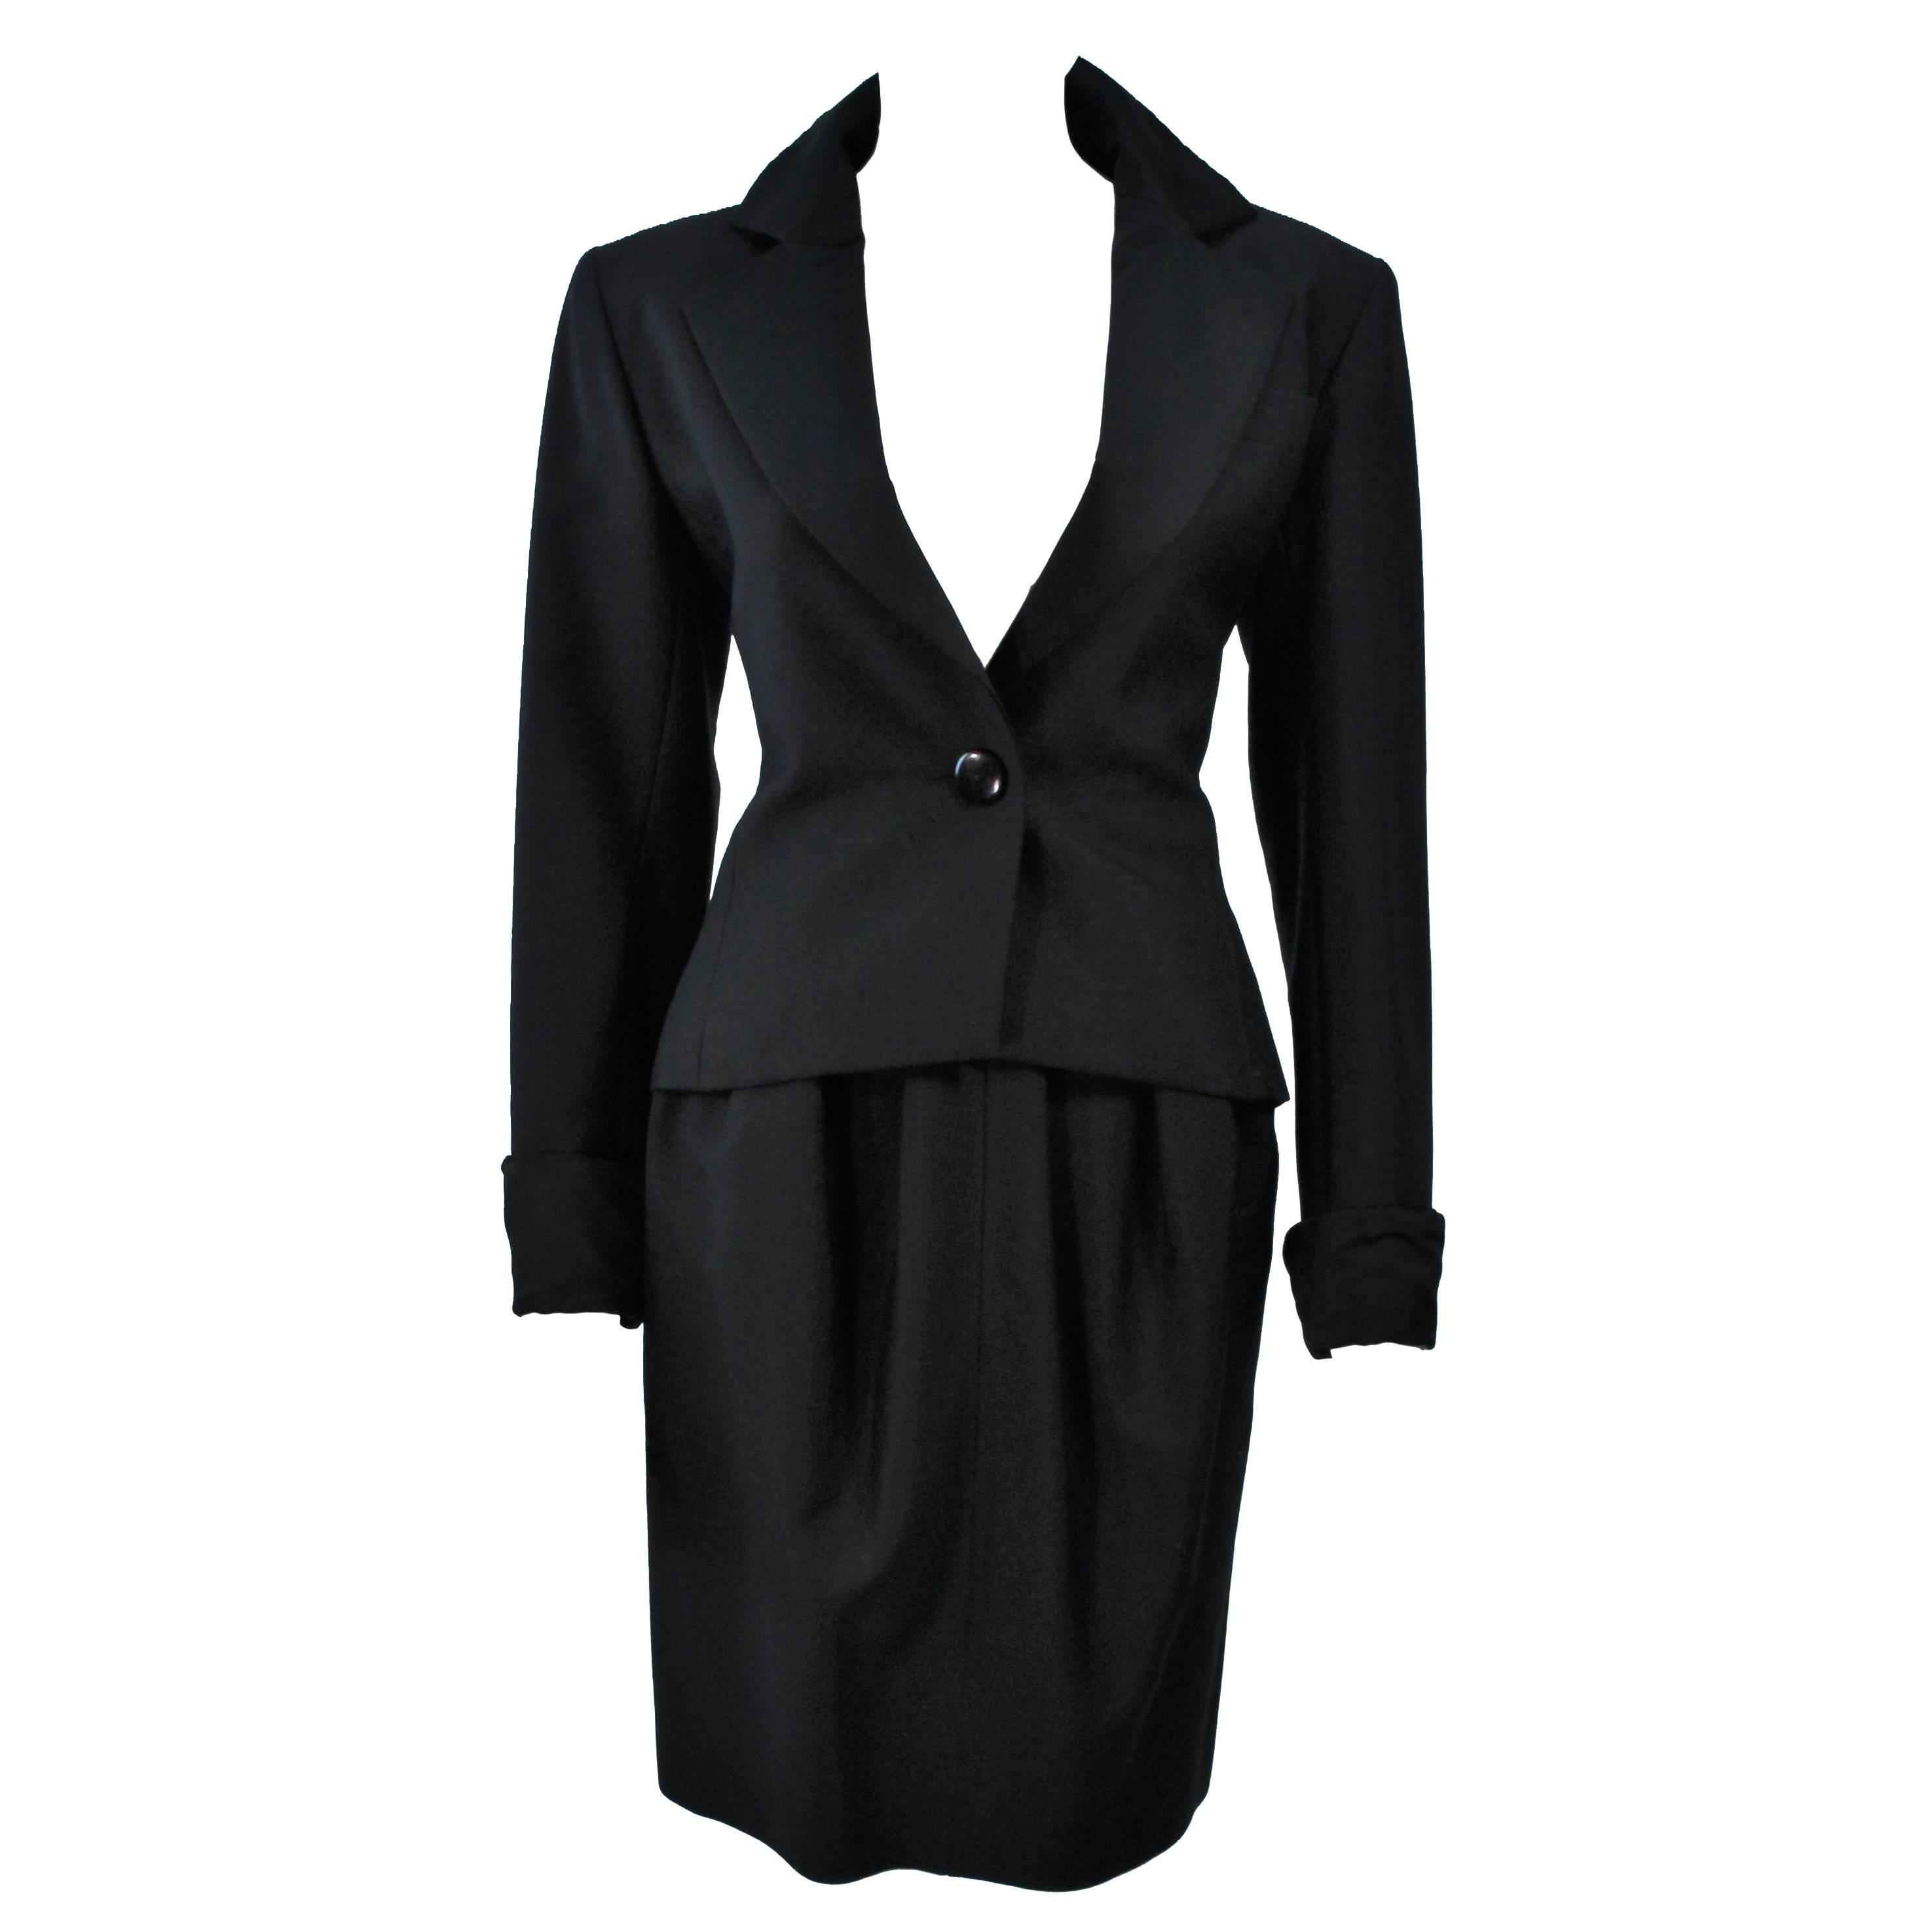 YVES SAINT LAURENT Black Wool Skirt Suit with Satin Trim Size 36 For Sale